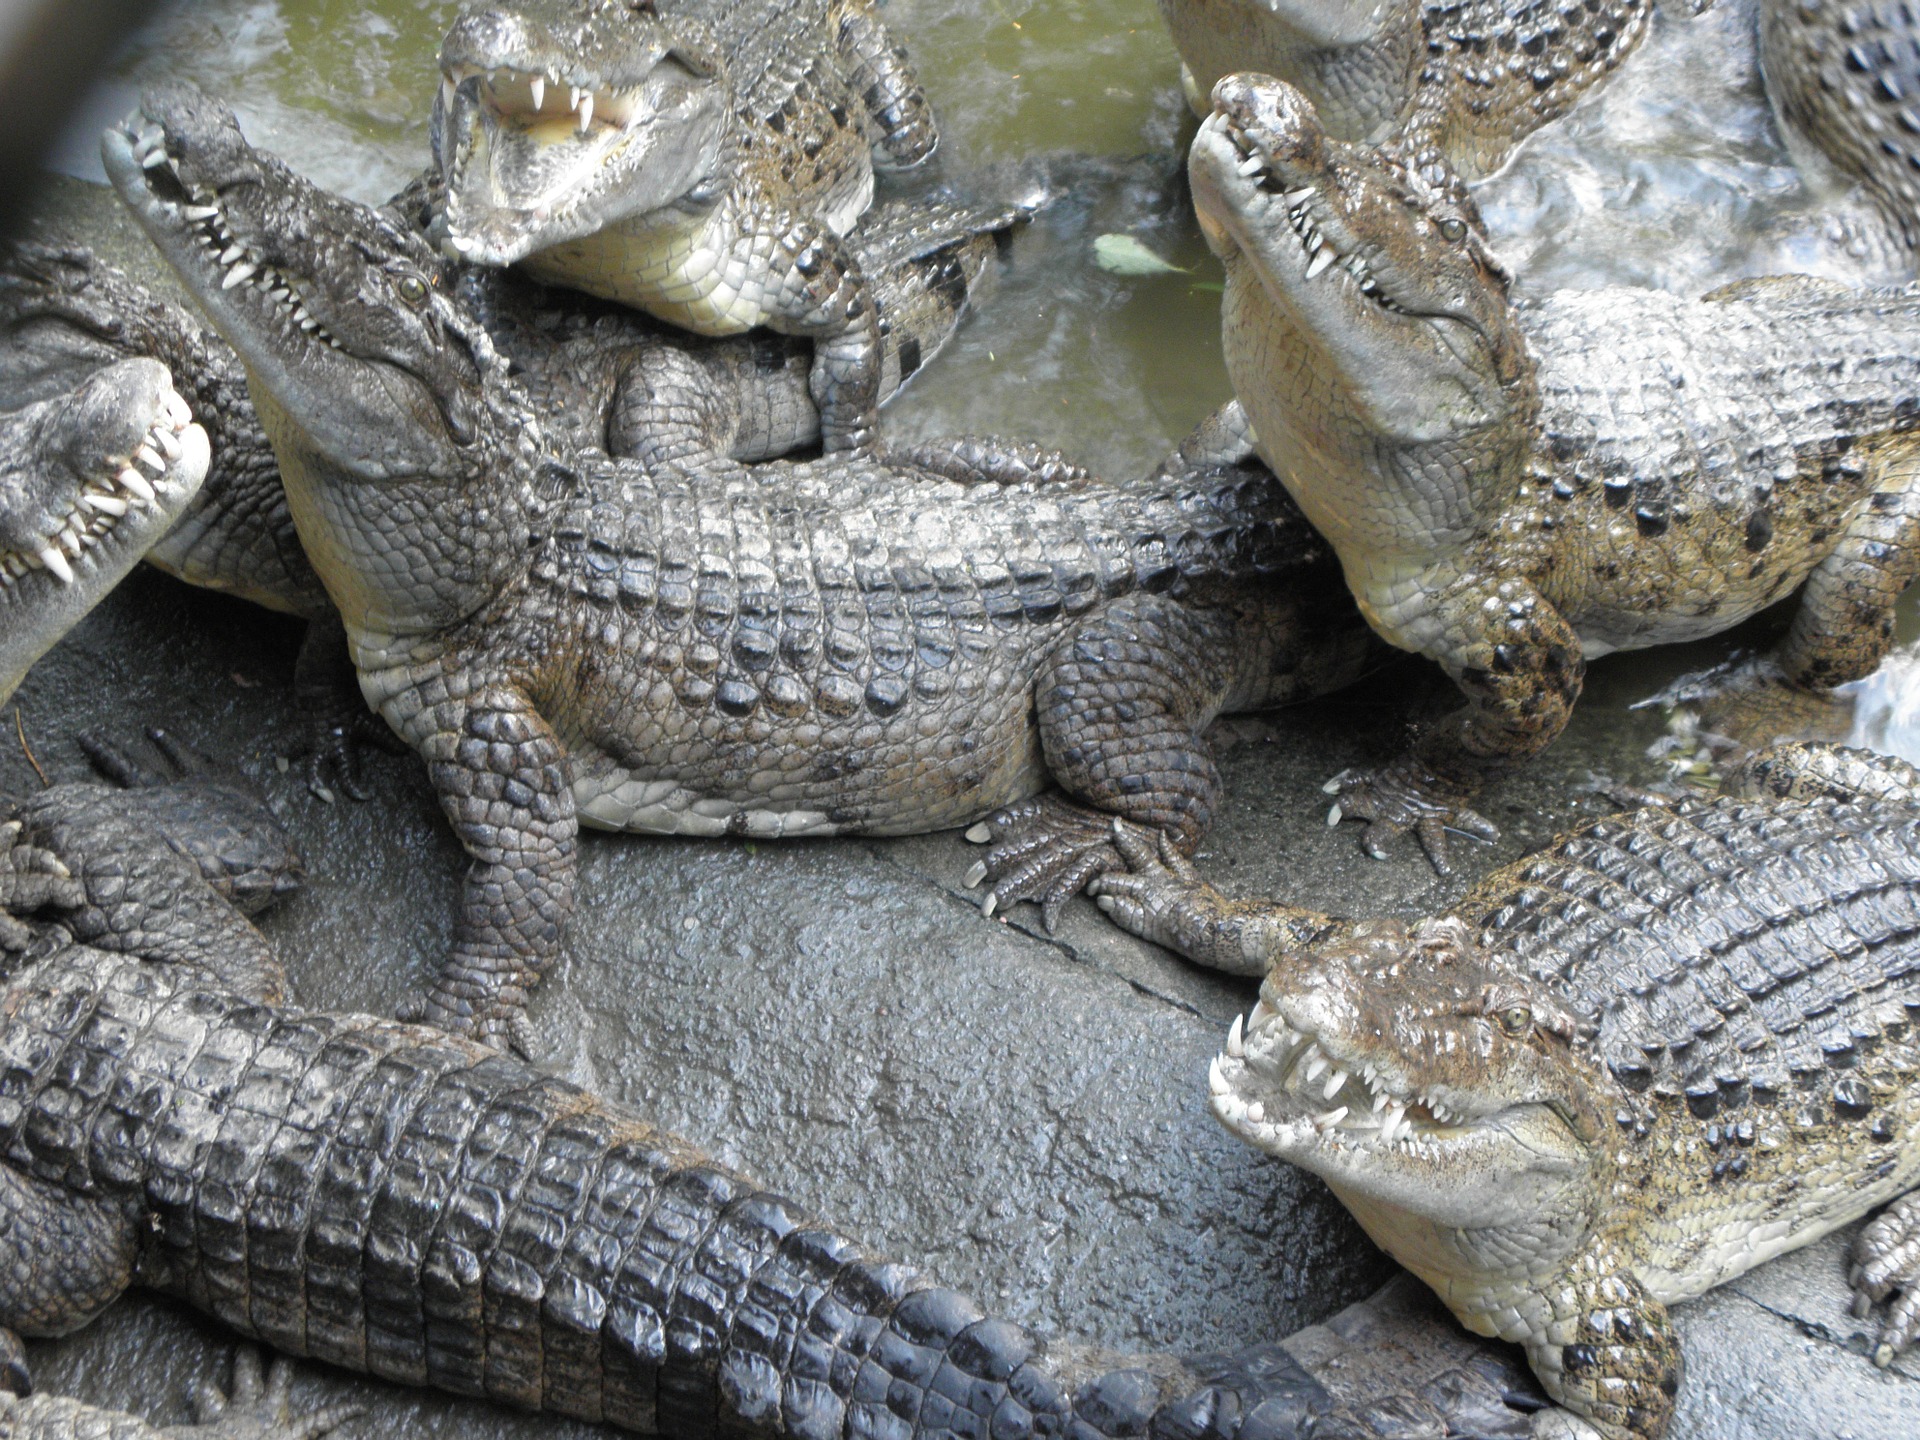 Philippines Crocodile (Crocodylus mindorensis)